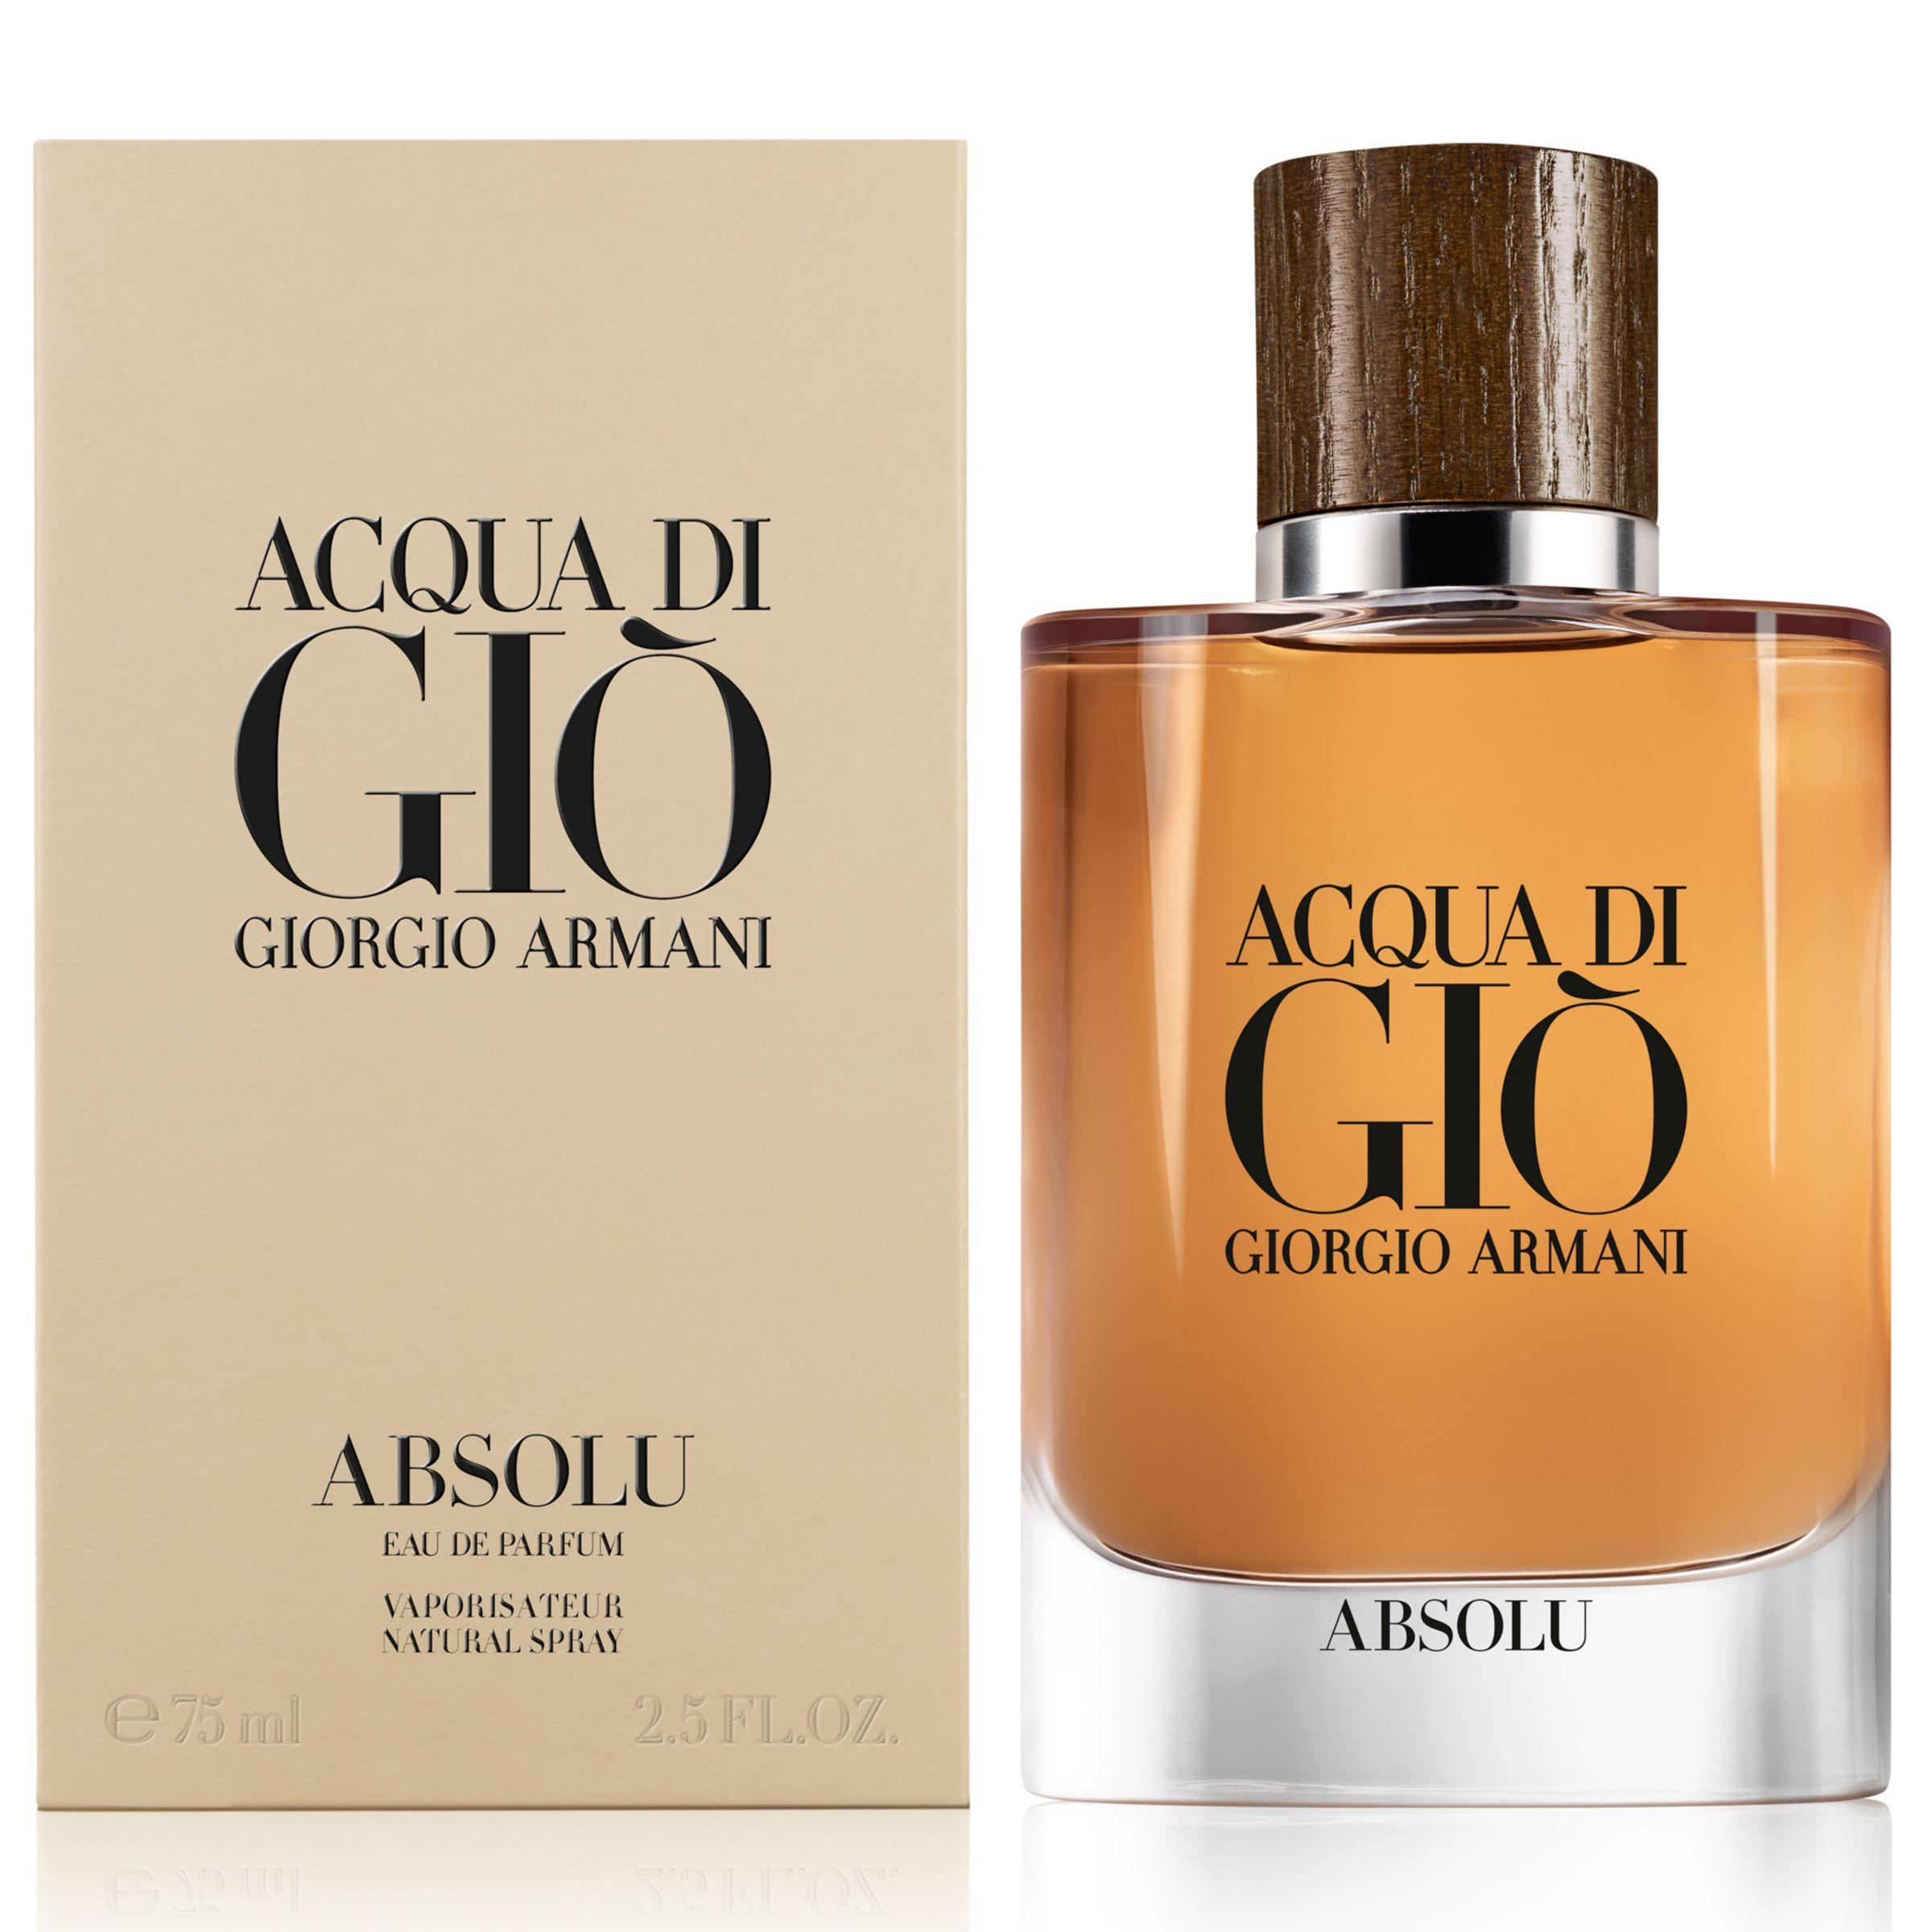 Giorgio Armani Acqua di Giò Absolu Eau de Parfum, 75ml at John Lewis &  Partners